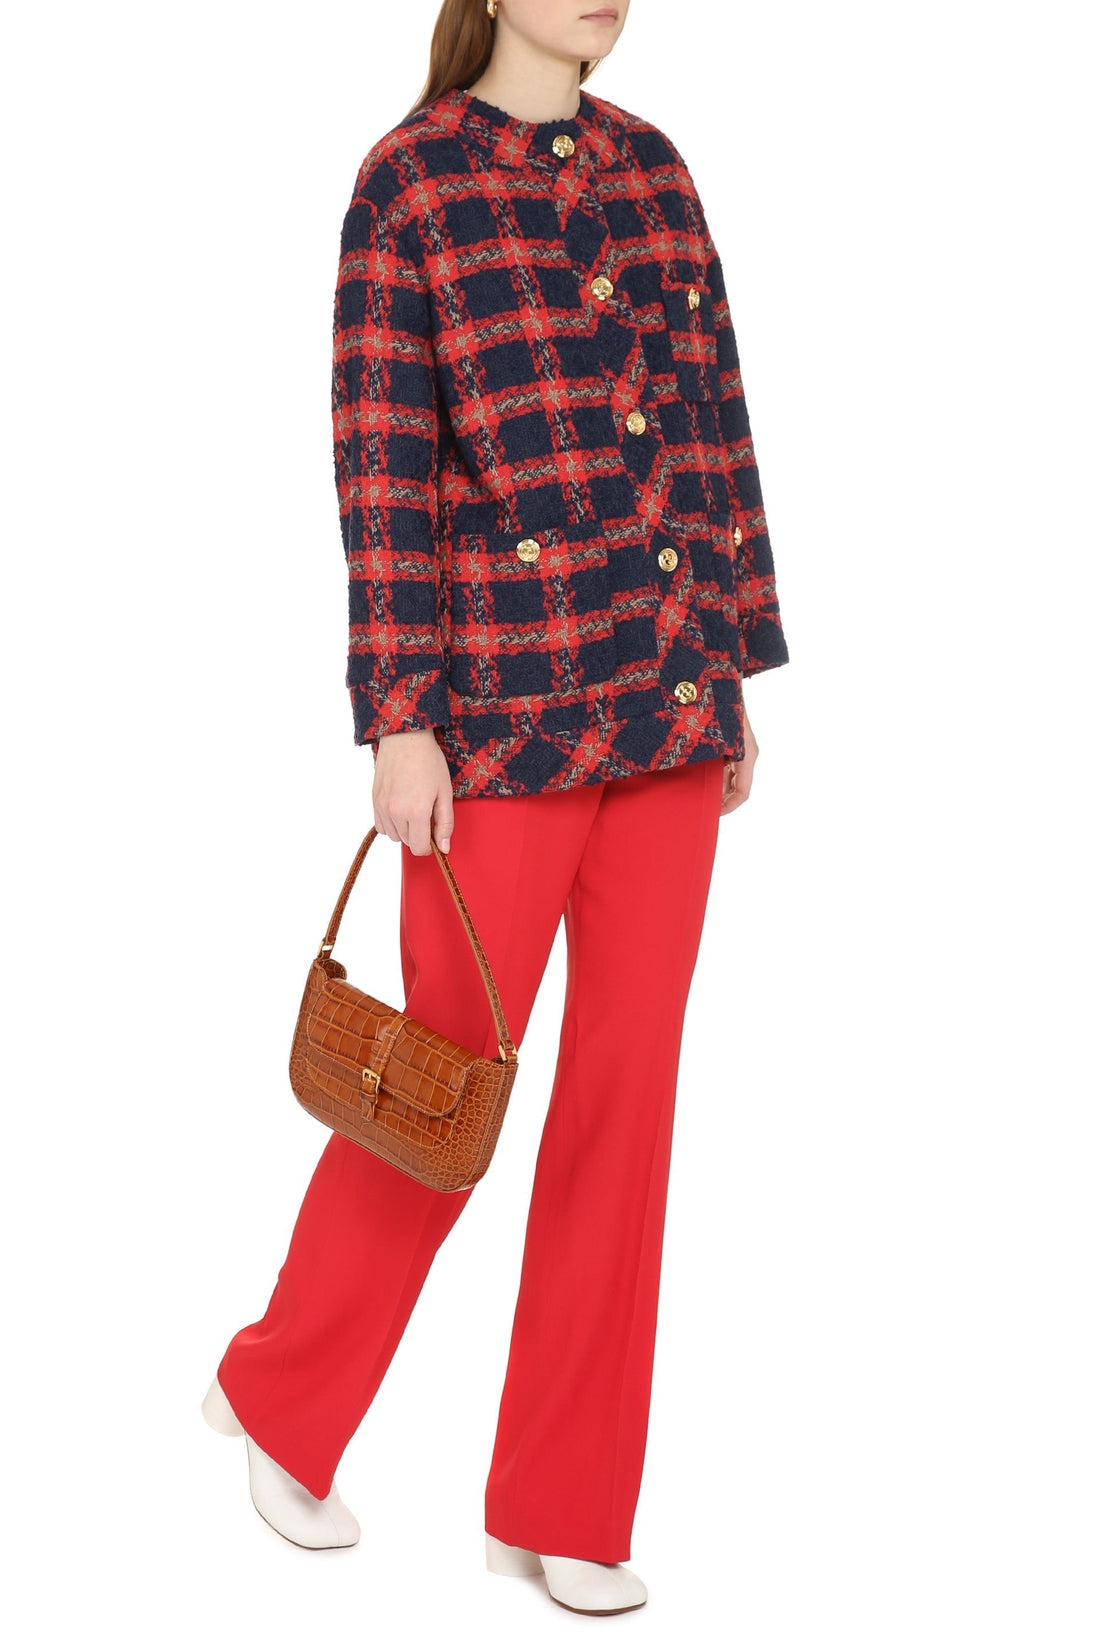 Gucci-OUTLET-SALE-Wool blend tweed jacket-ARCHIVIST